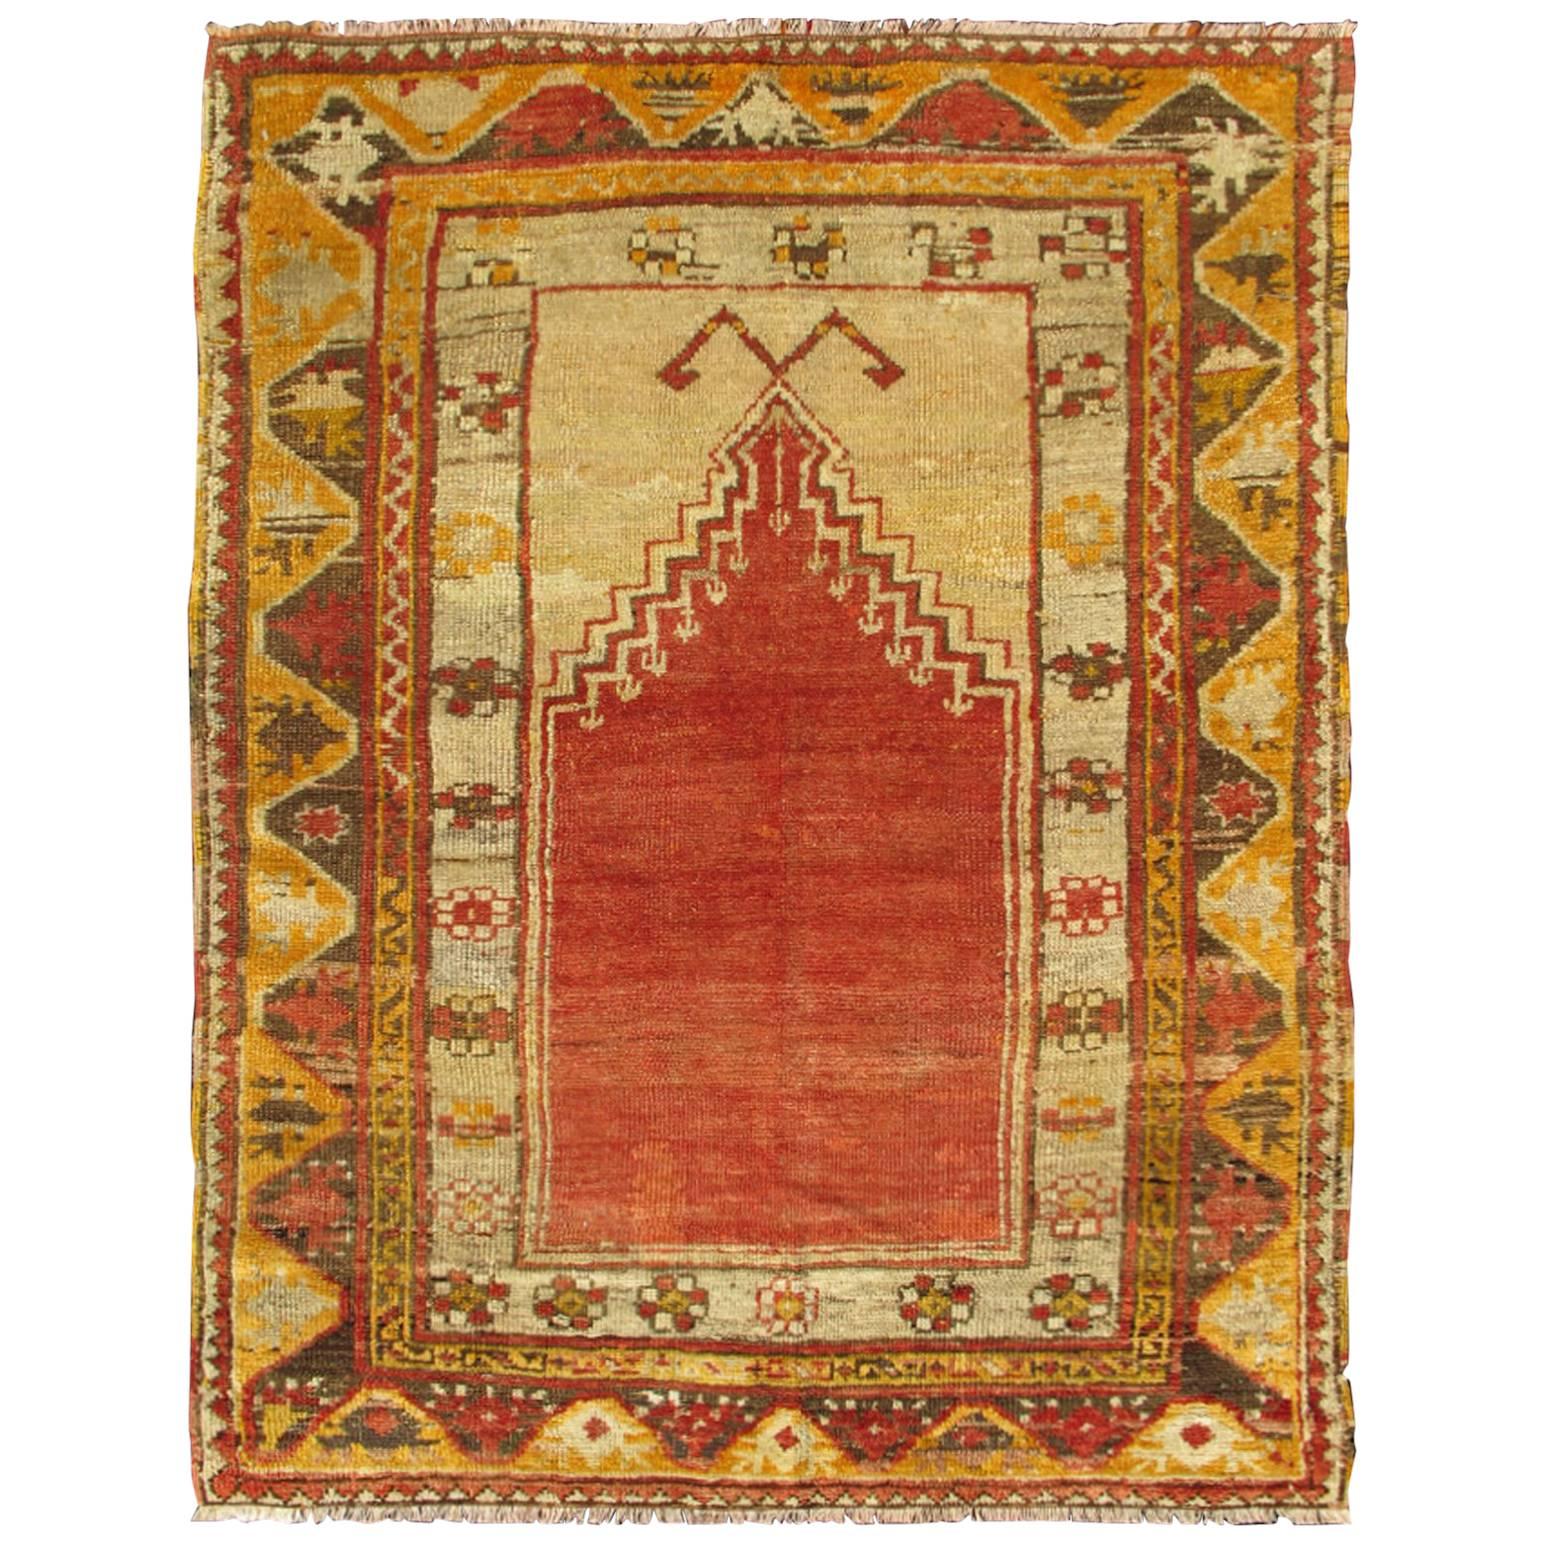 Antique Turkish Oushak Prayer Rug in Red, Ivory, Brown, Orange and Yellow, 1910